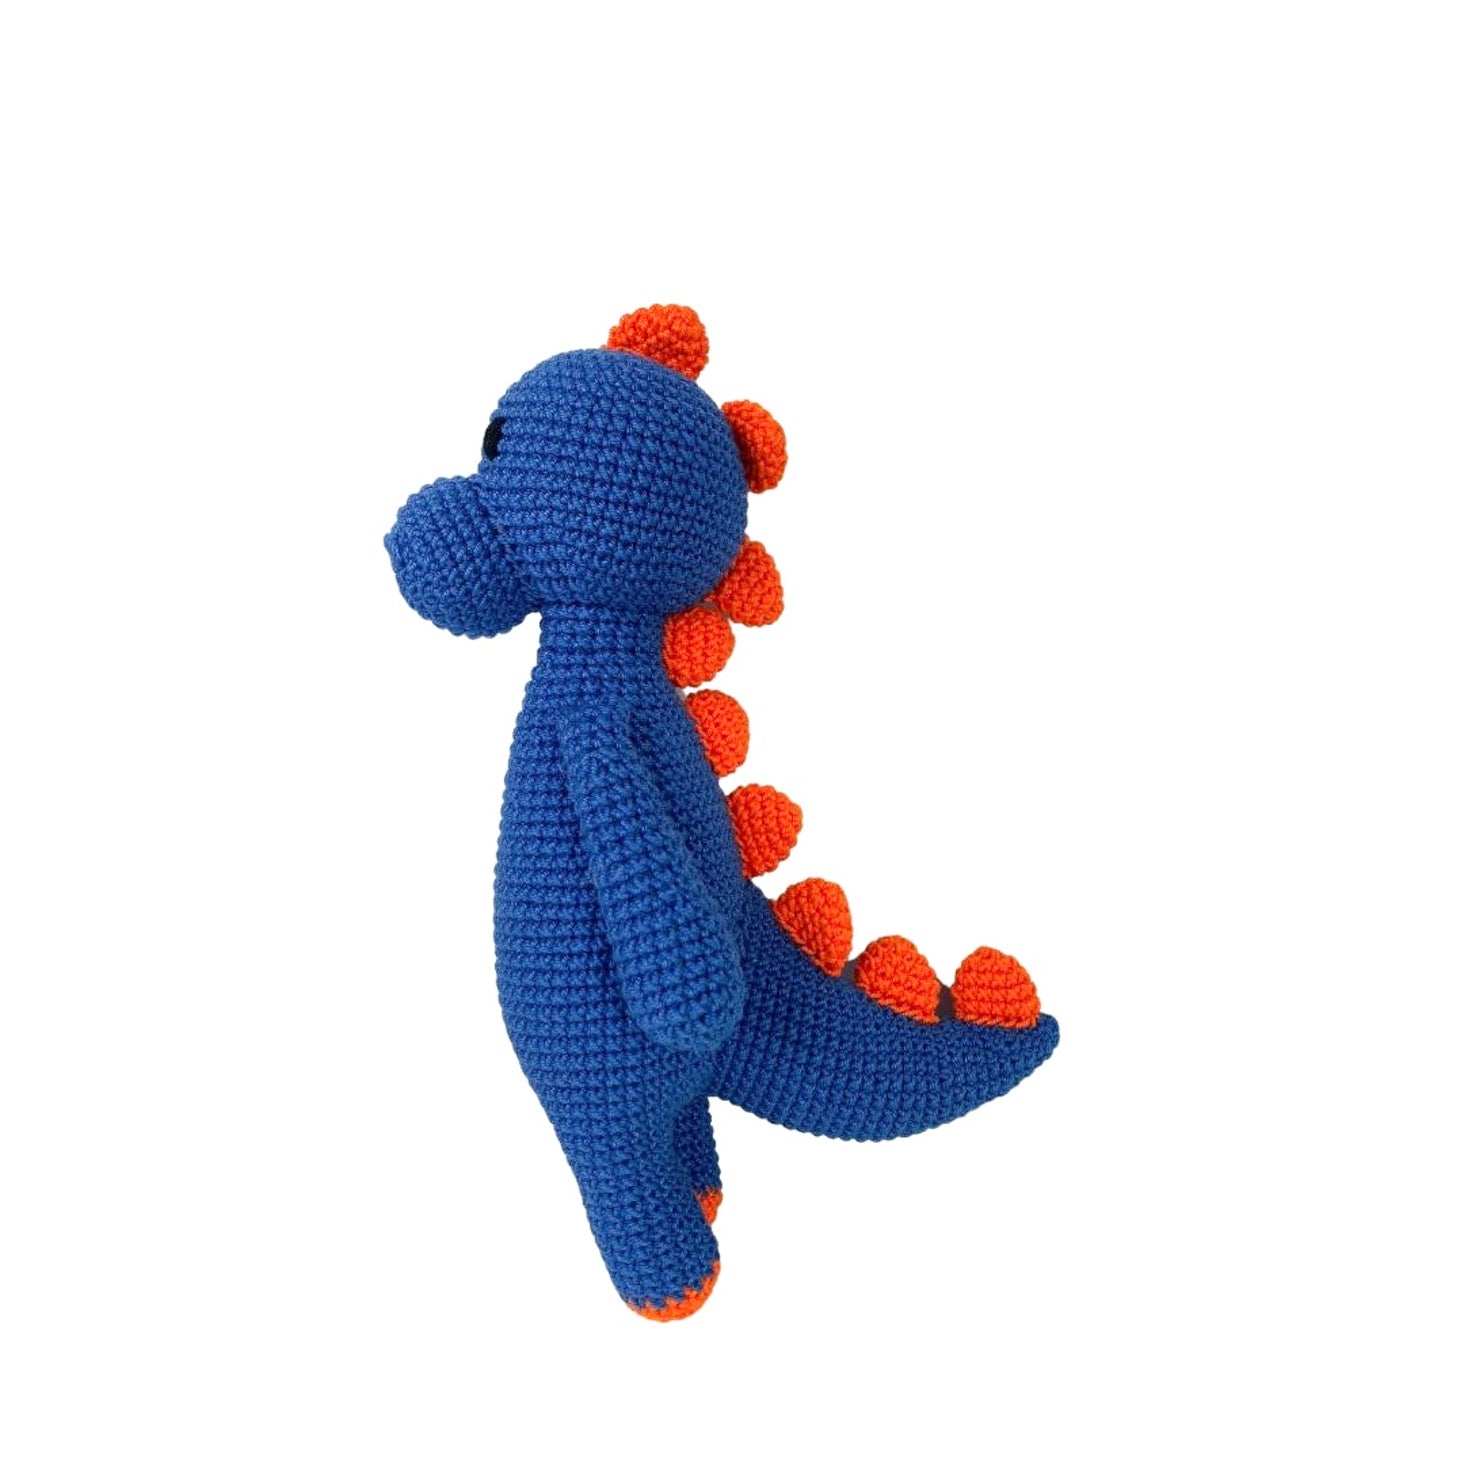 Blue Dinosaur Crochet Stuffed Animal